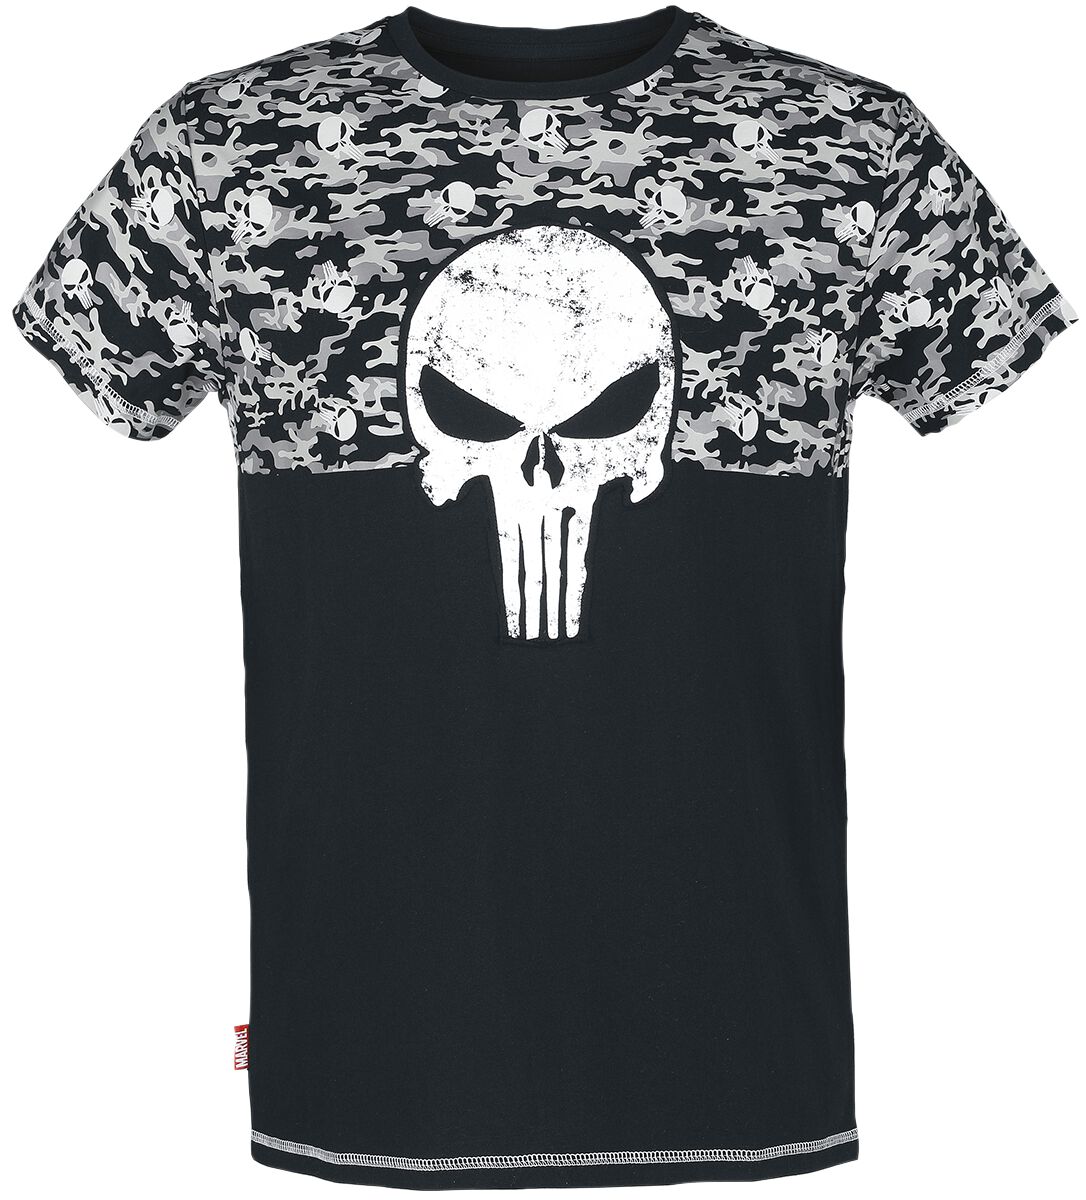 Image of T-Shirt di The Punisher - Skull Logo - S a M - Uomo - multicolore